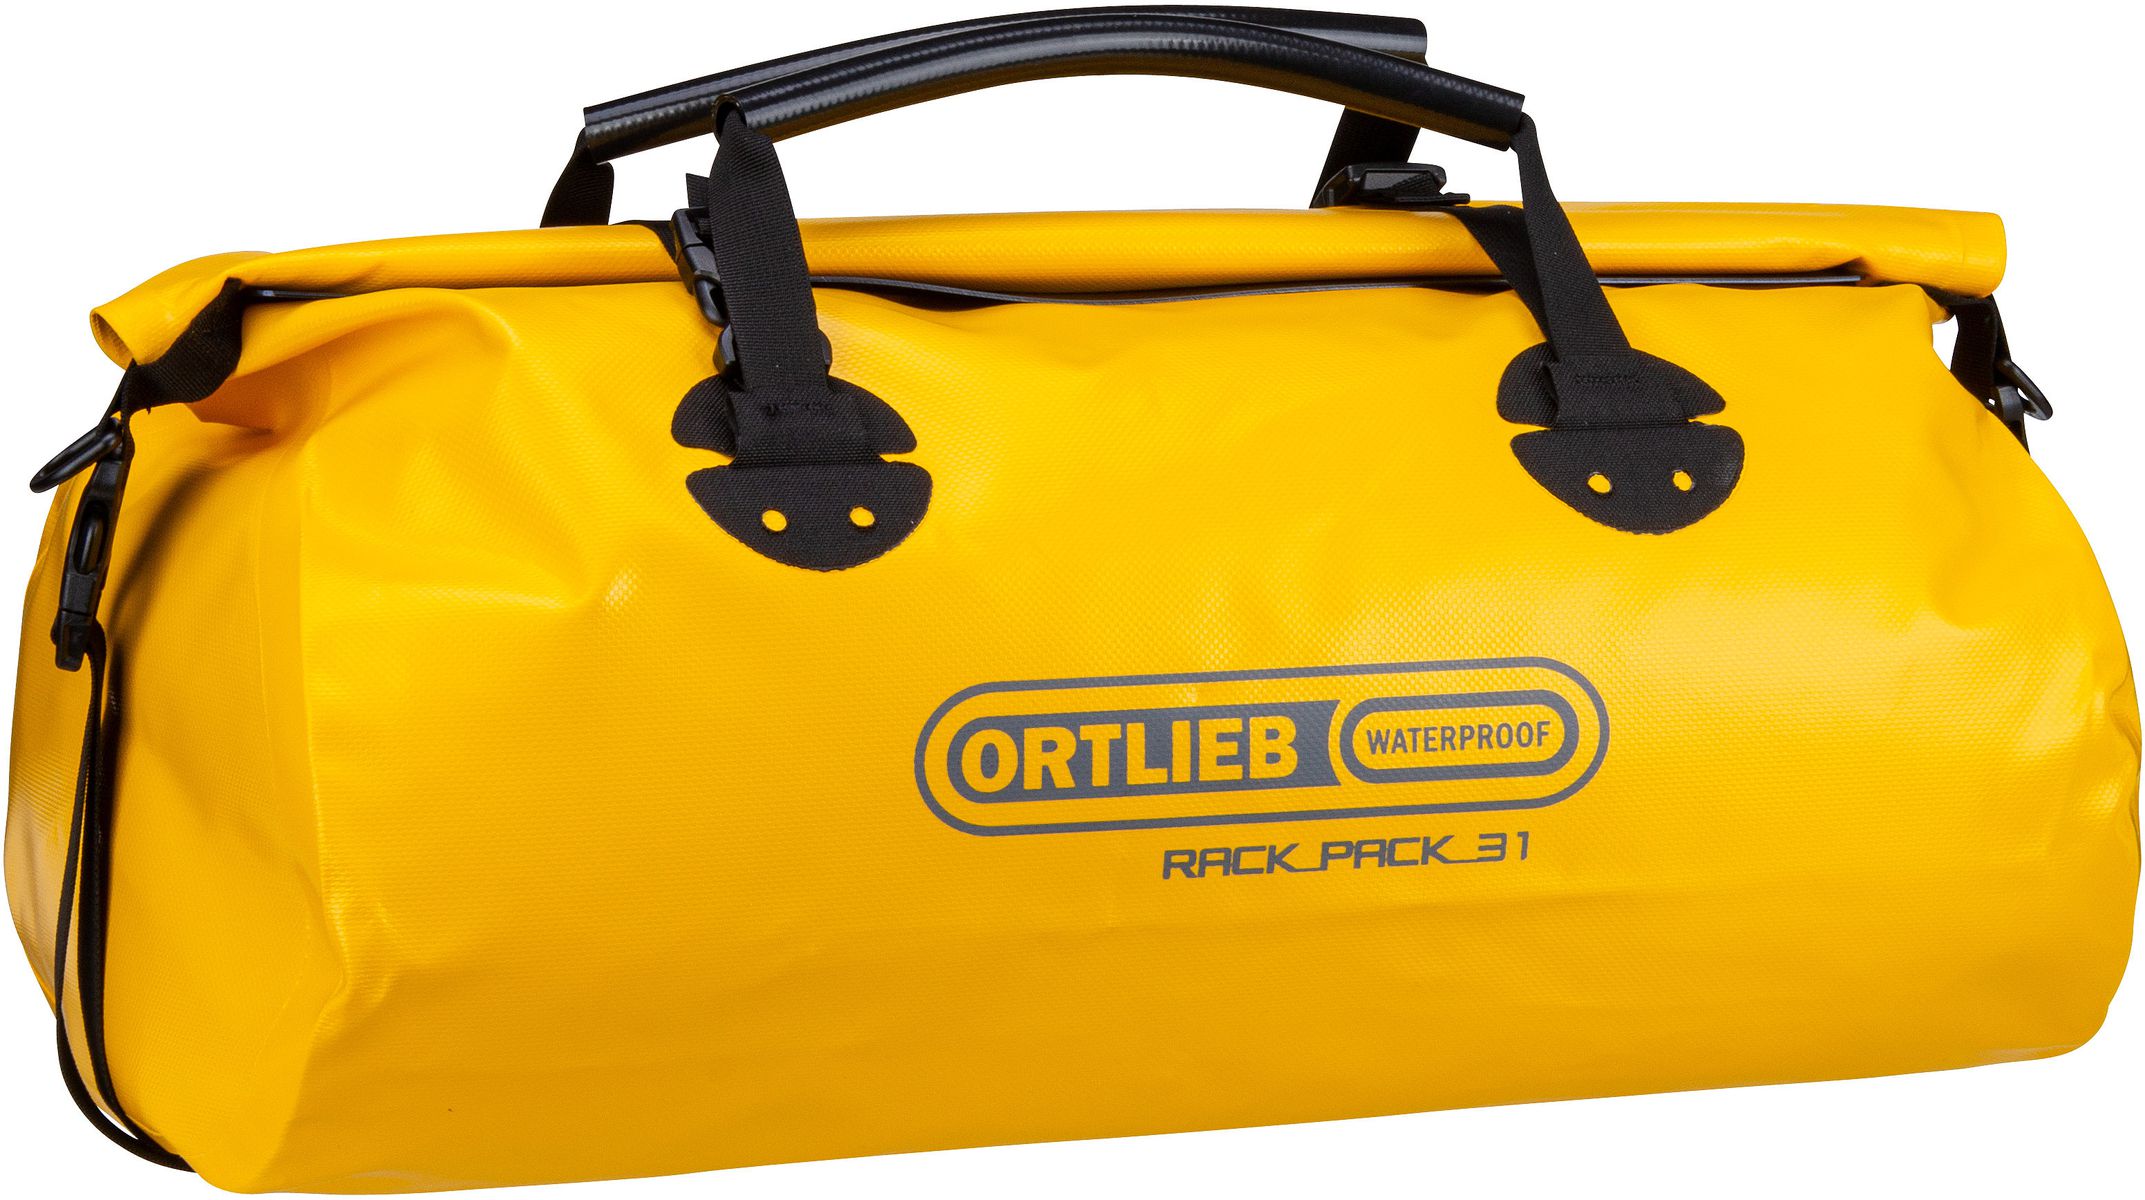 ORTLIEB Rack-Pack 31L  in Gelb (31 Liter), Reisetasche